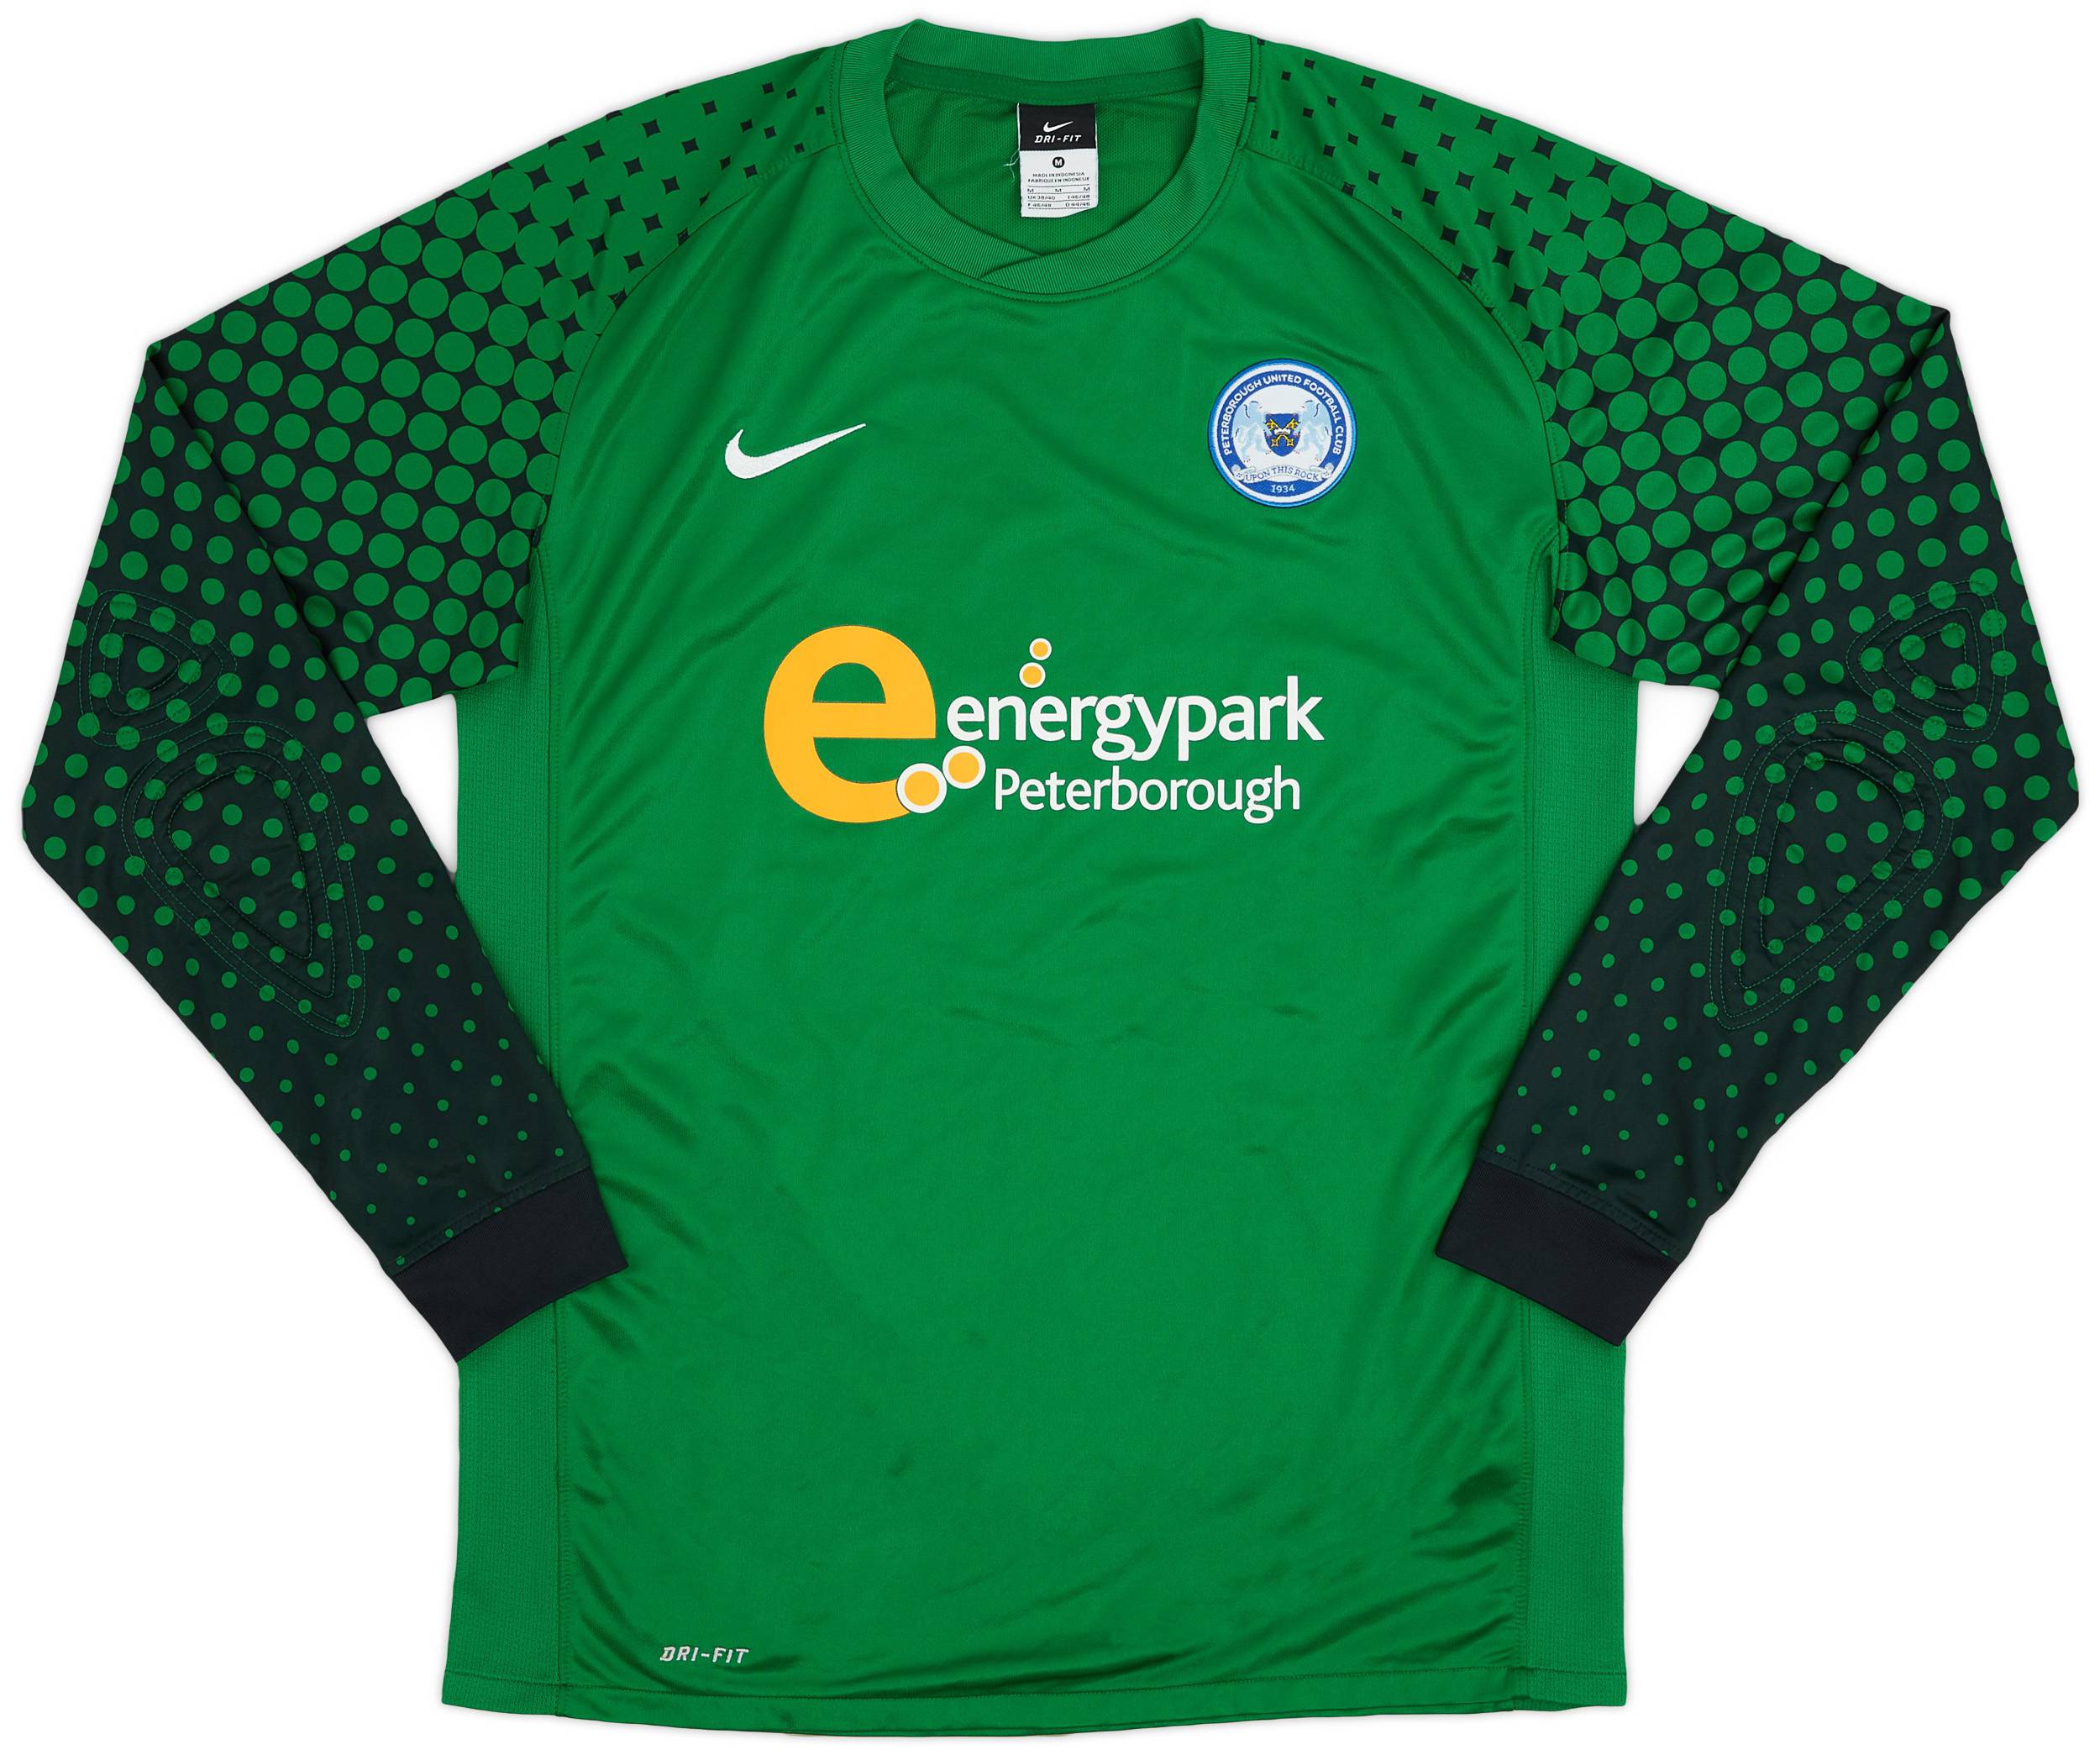 2011-12 Peterborough GK Shirt #13 - 9/10 - (M)